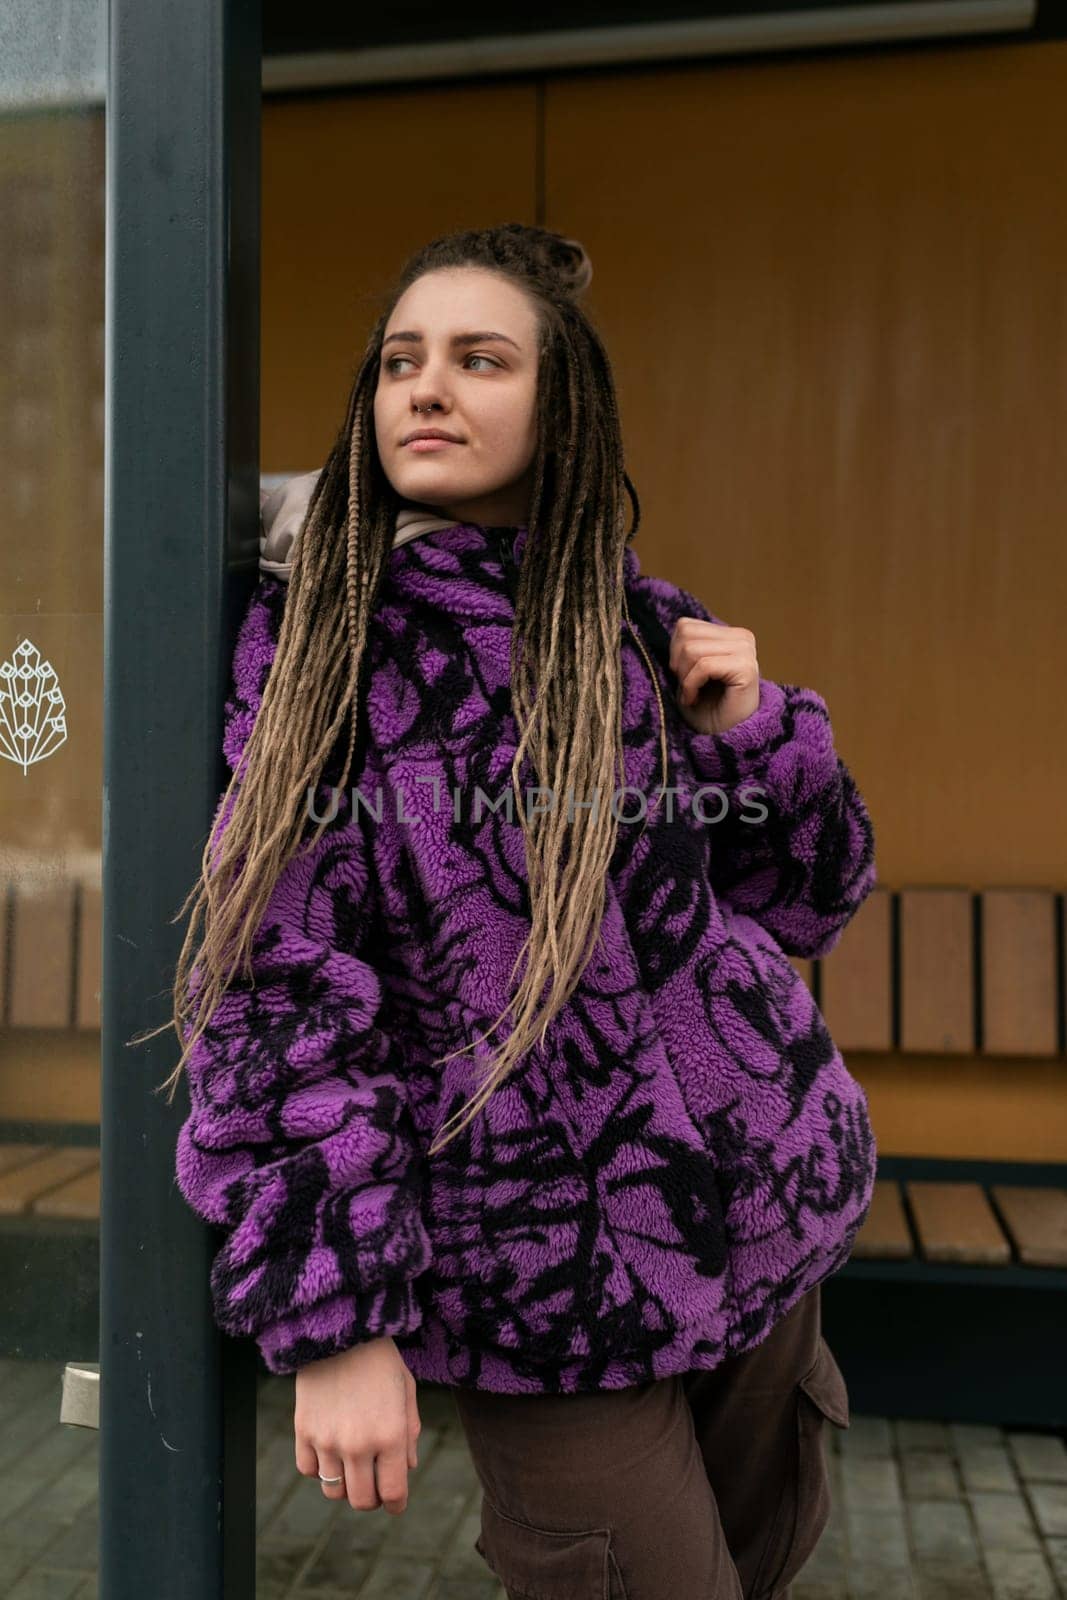 European woman with dreadlocks and piercings wearing a purple jacket by TRMK